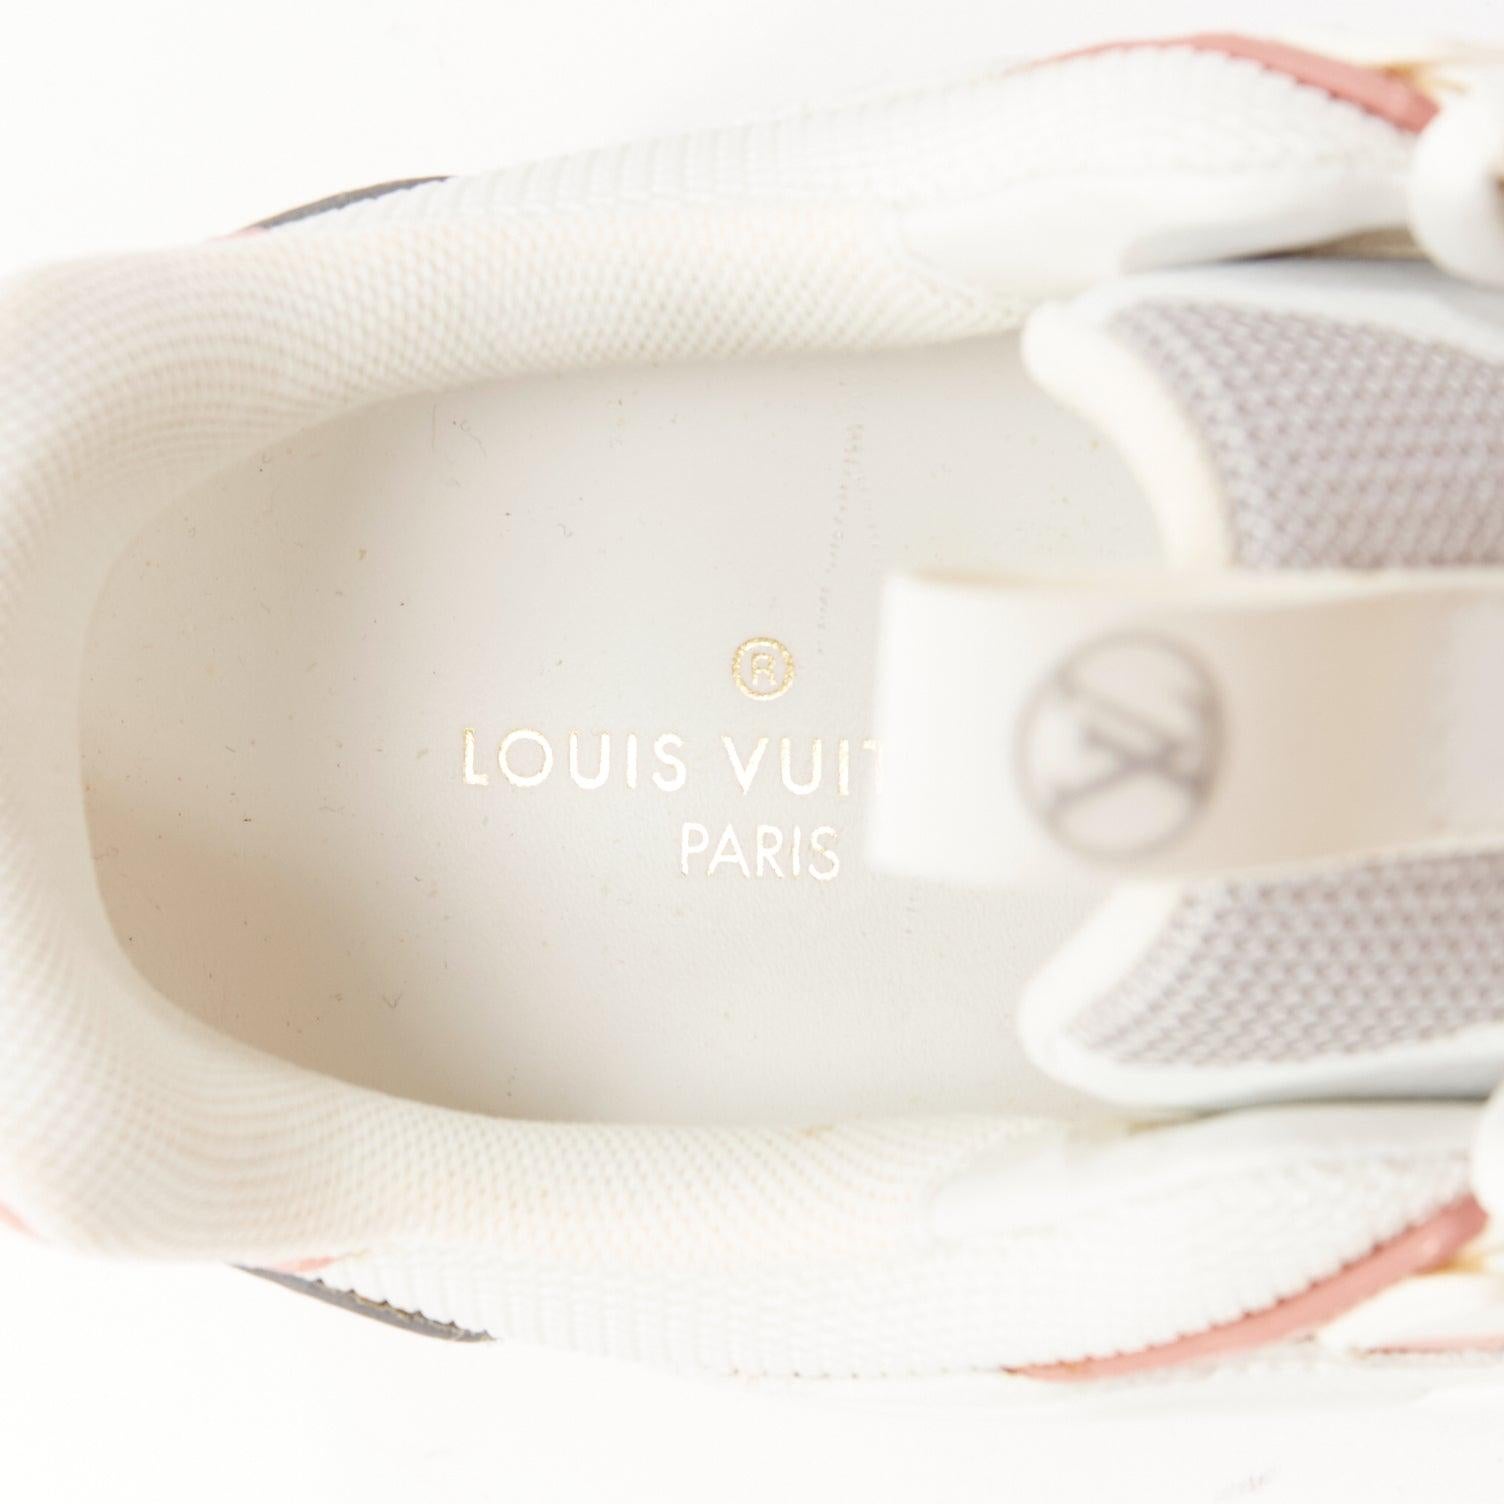 LOUIS VUITTON Run Away off white pink LV logo mesh leather sneakers EU38 For Sale 5